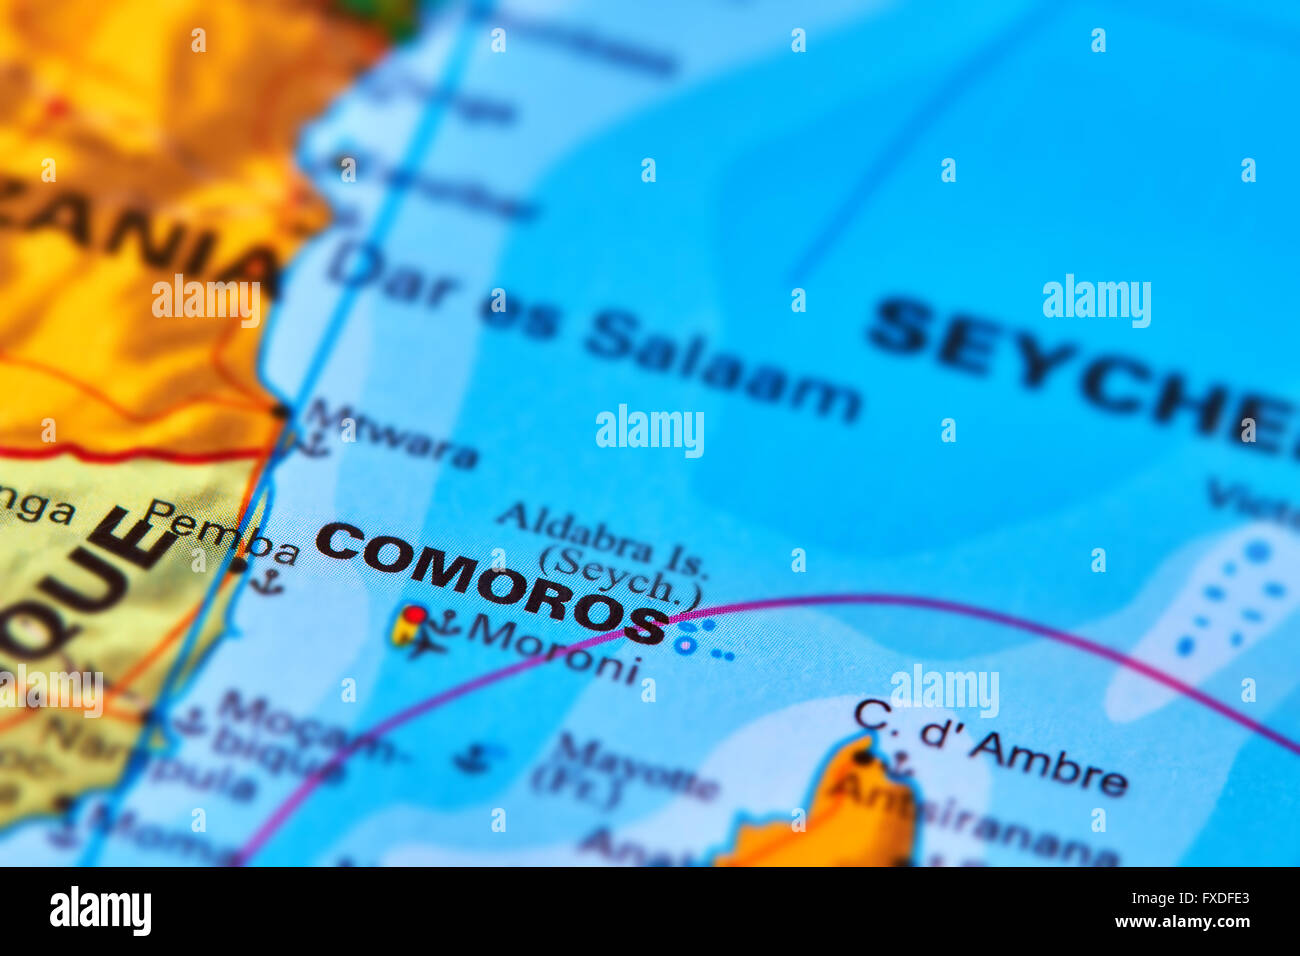 Comoros Islands on the World Map Stock Photo